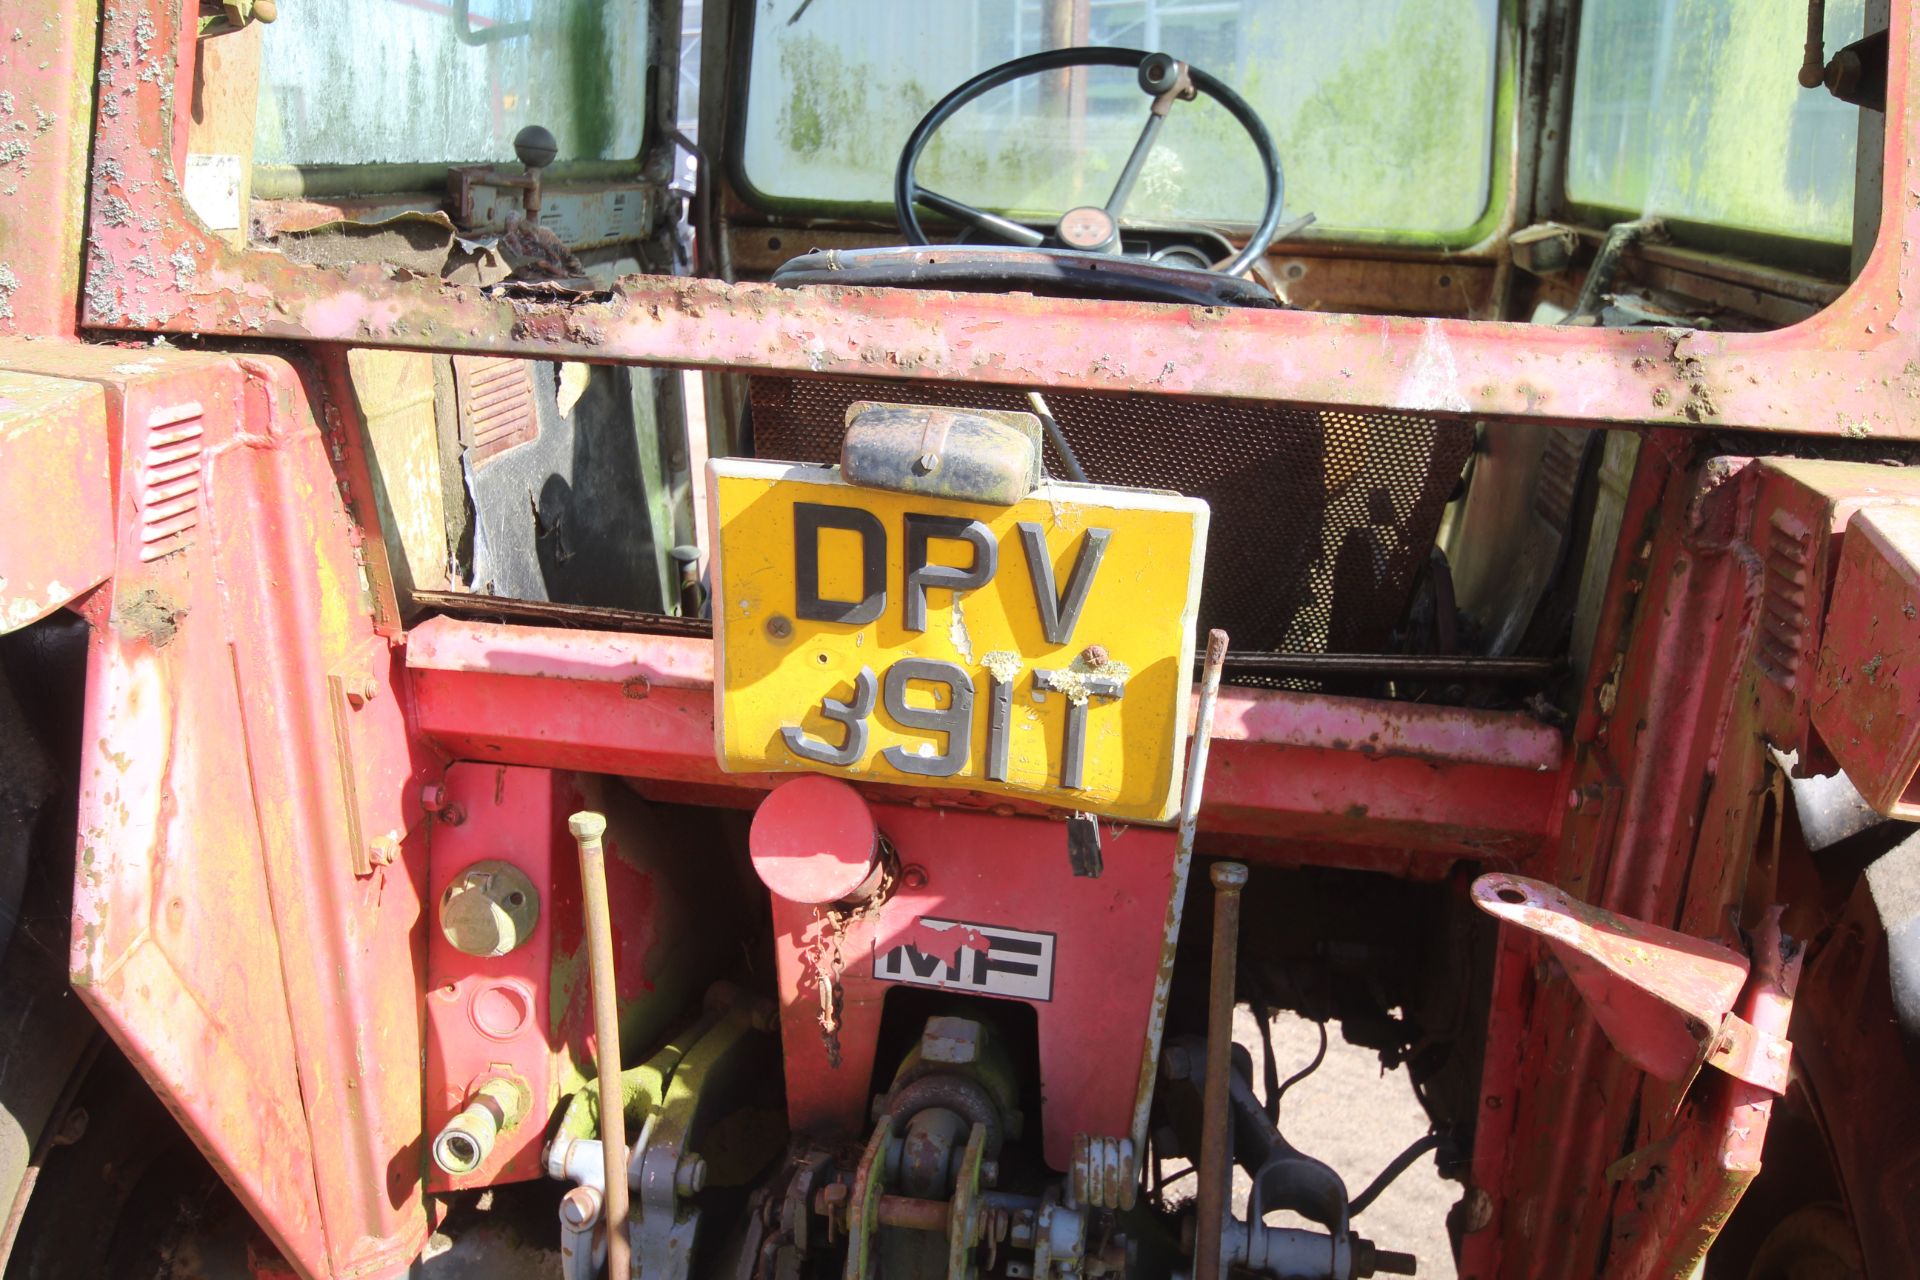 Massey Ferguson 550 2WD tractor. Registration DPV 391T (no paperwork). Date of first registration - Image 21 of 54